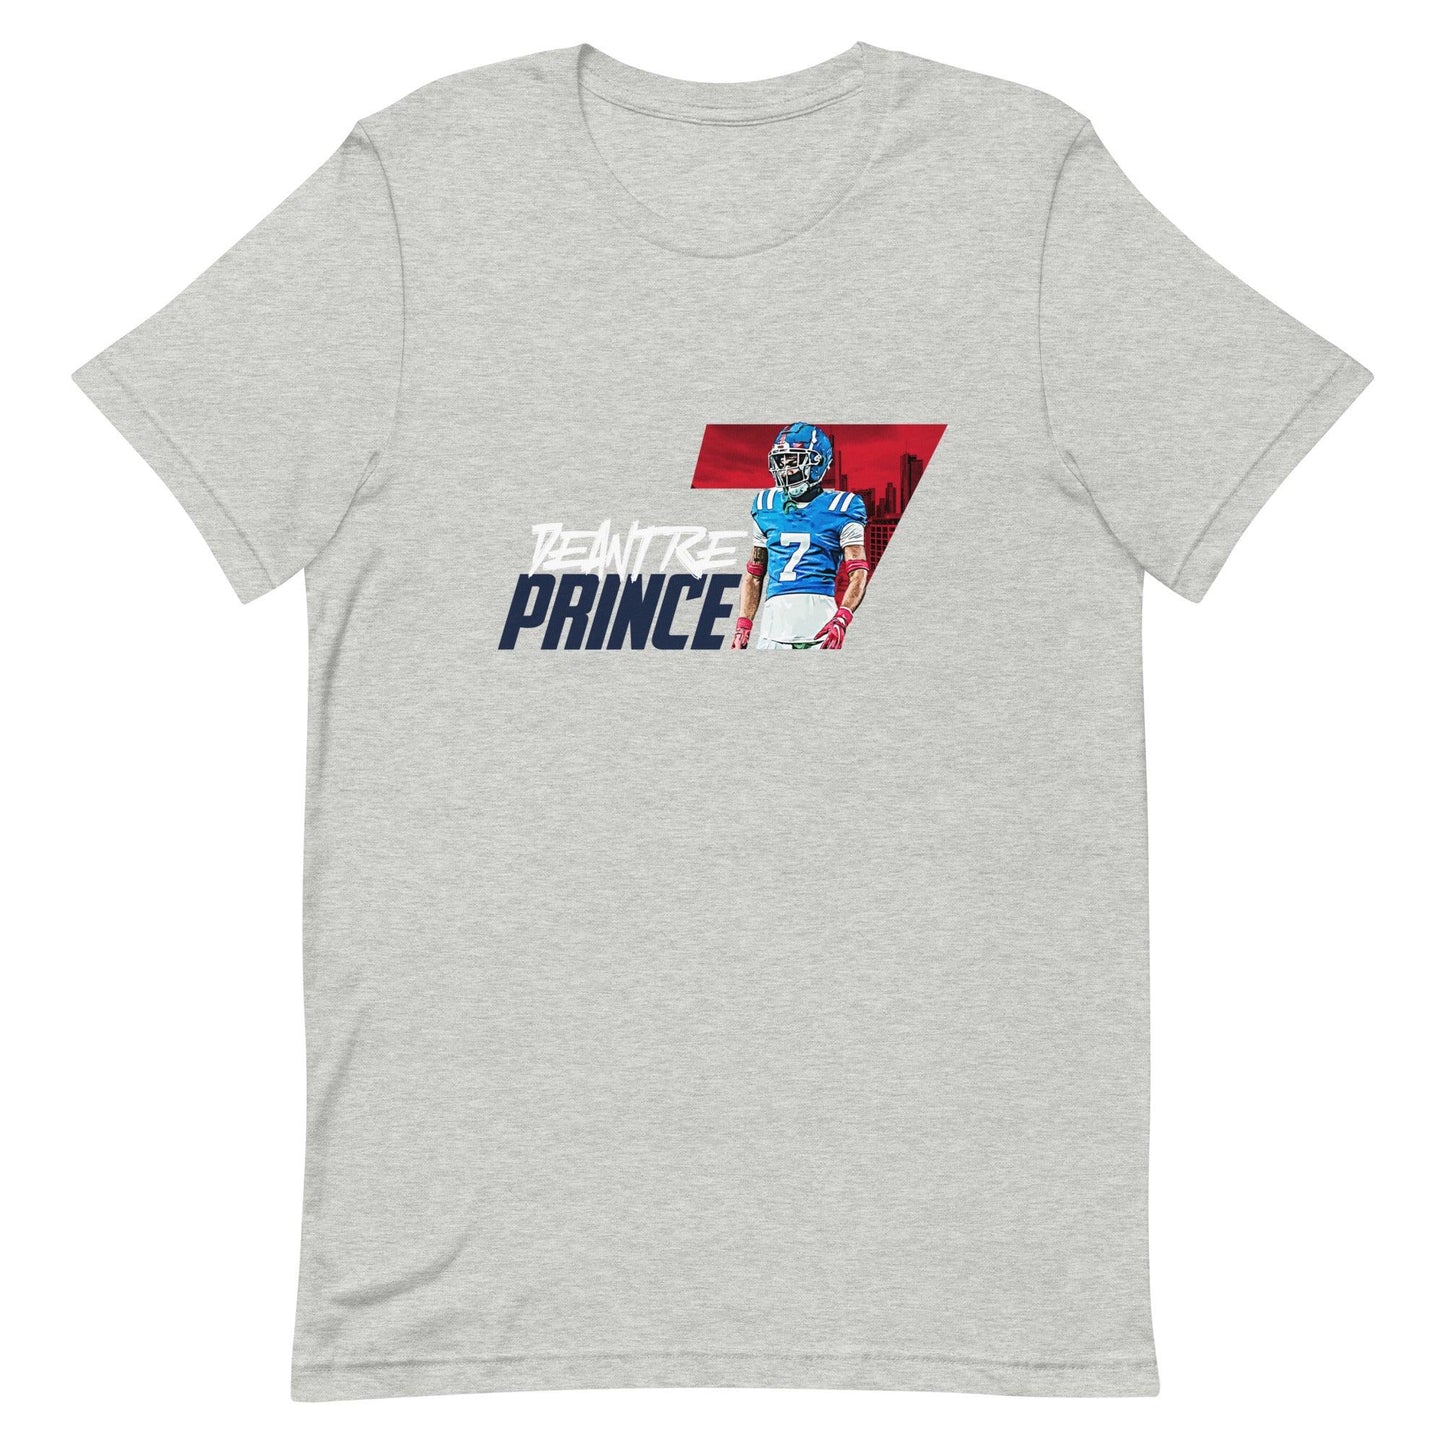 DeAntre Prince "Gameday" t-shirt - Fan Arch